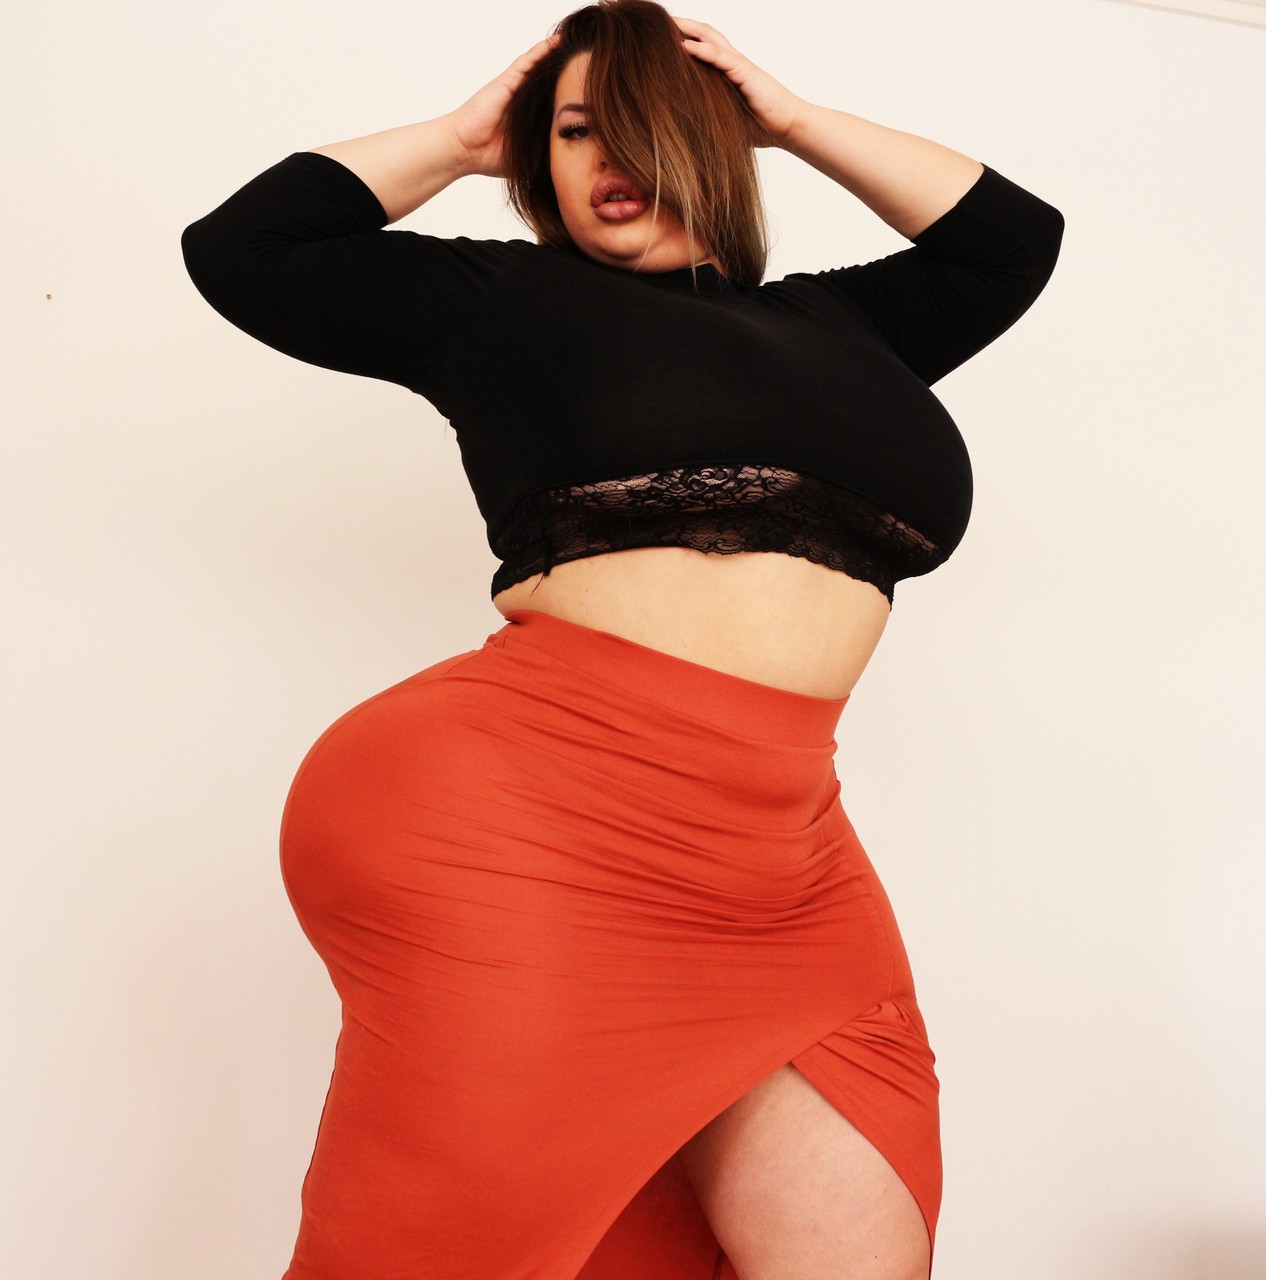 Stunning MILF fatty Natasha Crown flaunting her very big ass in a tight skirt 色情照片 #423816664 | Natasha Crown Pics, Natasha Crown, BBW, 手机色情